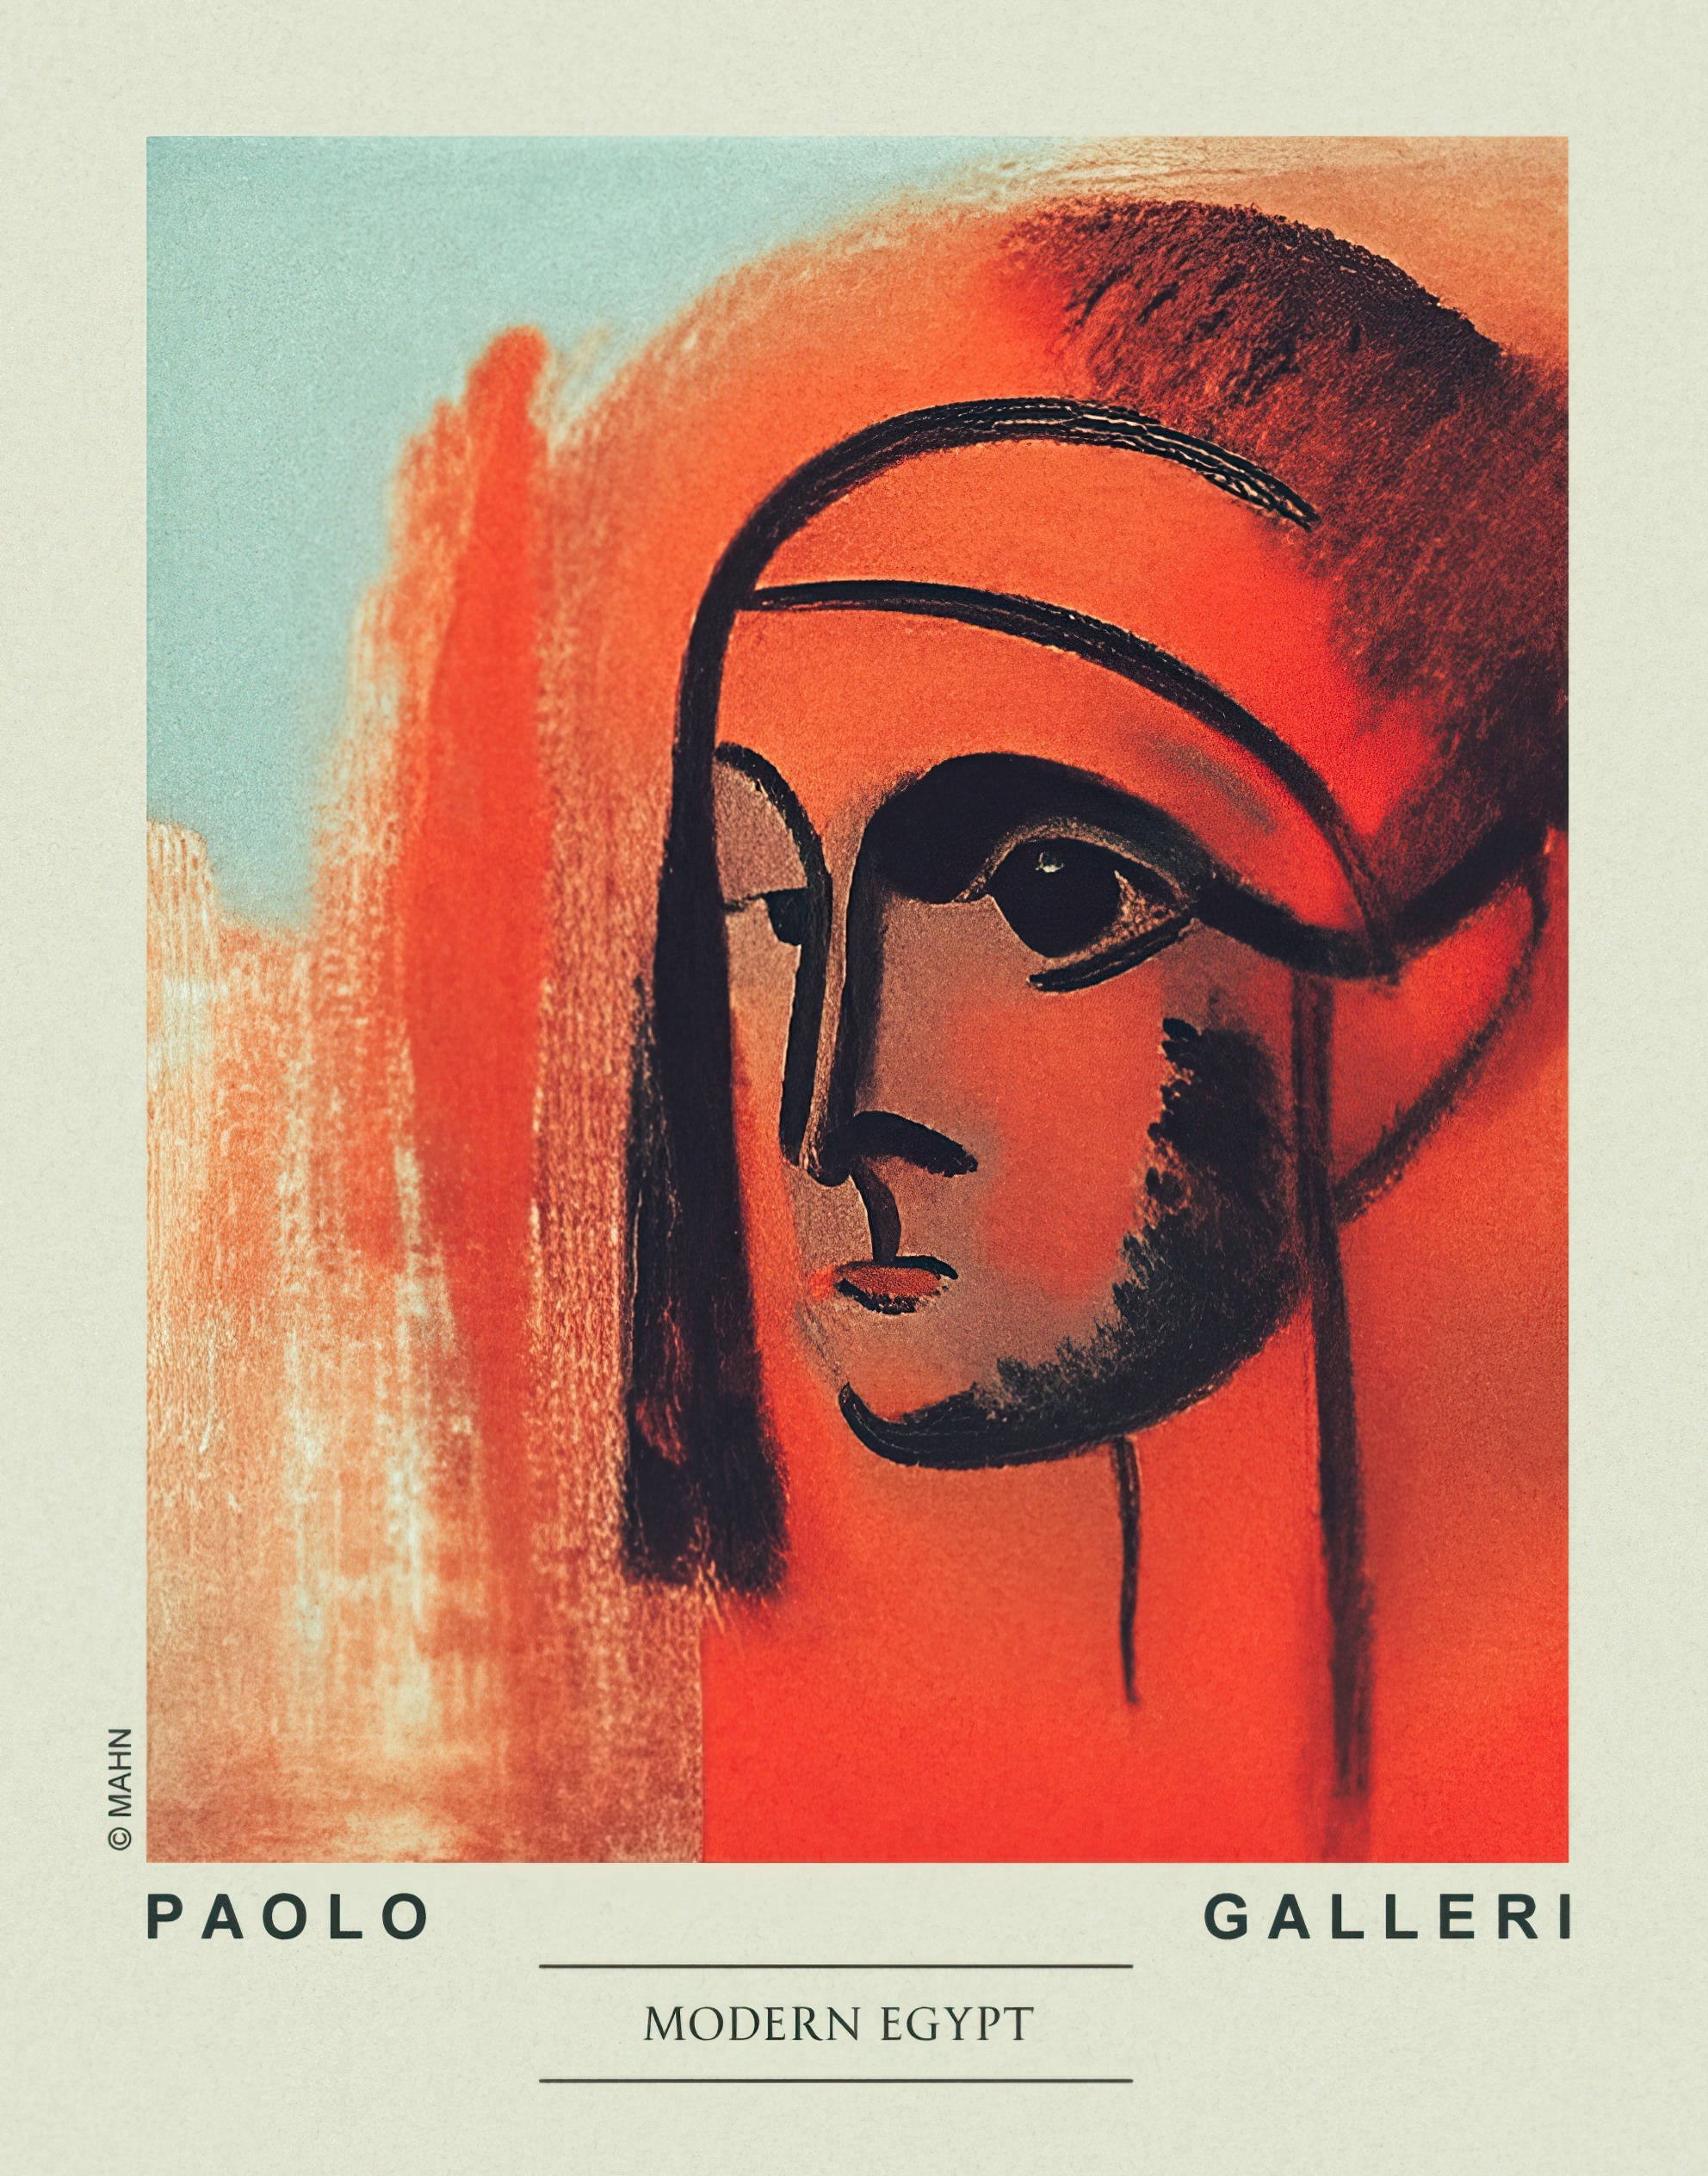 'Modern Egypt' |Paolo Galleri|